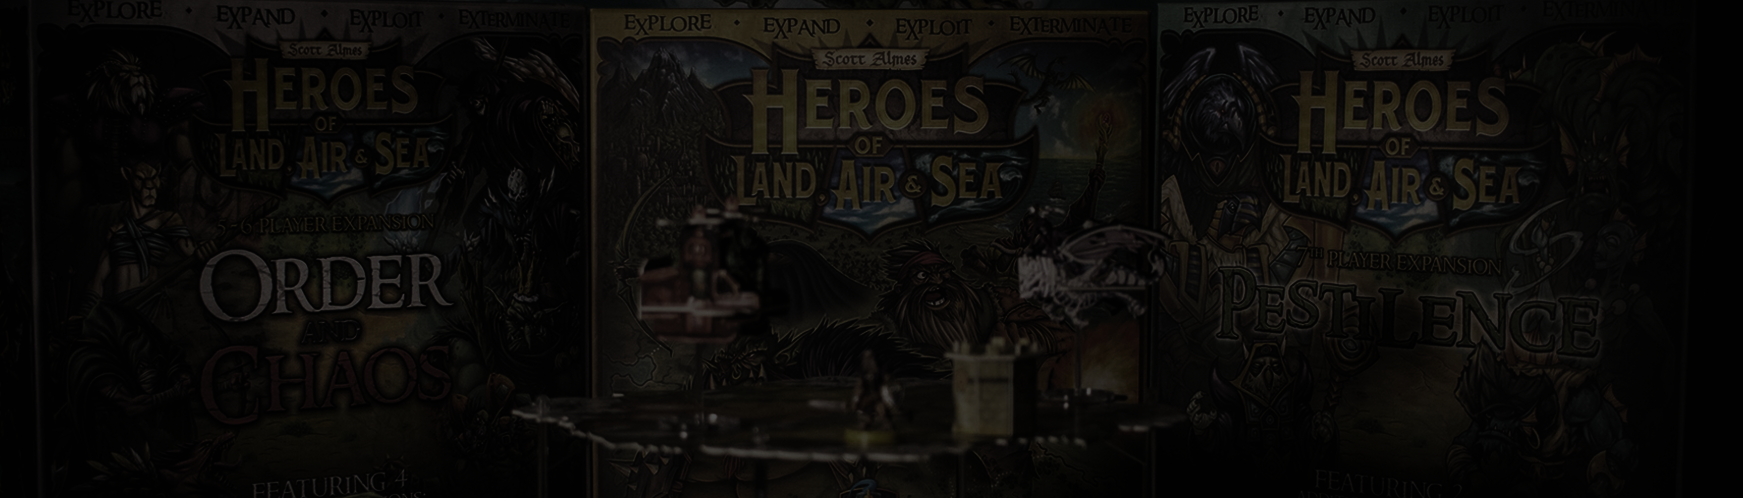 Heroes of Land, Air & Sea - Deluxe Reprint by Michael Coe - Gamelyn Games